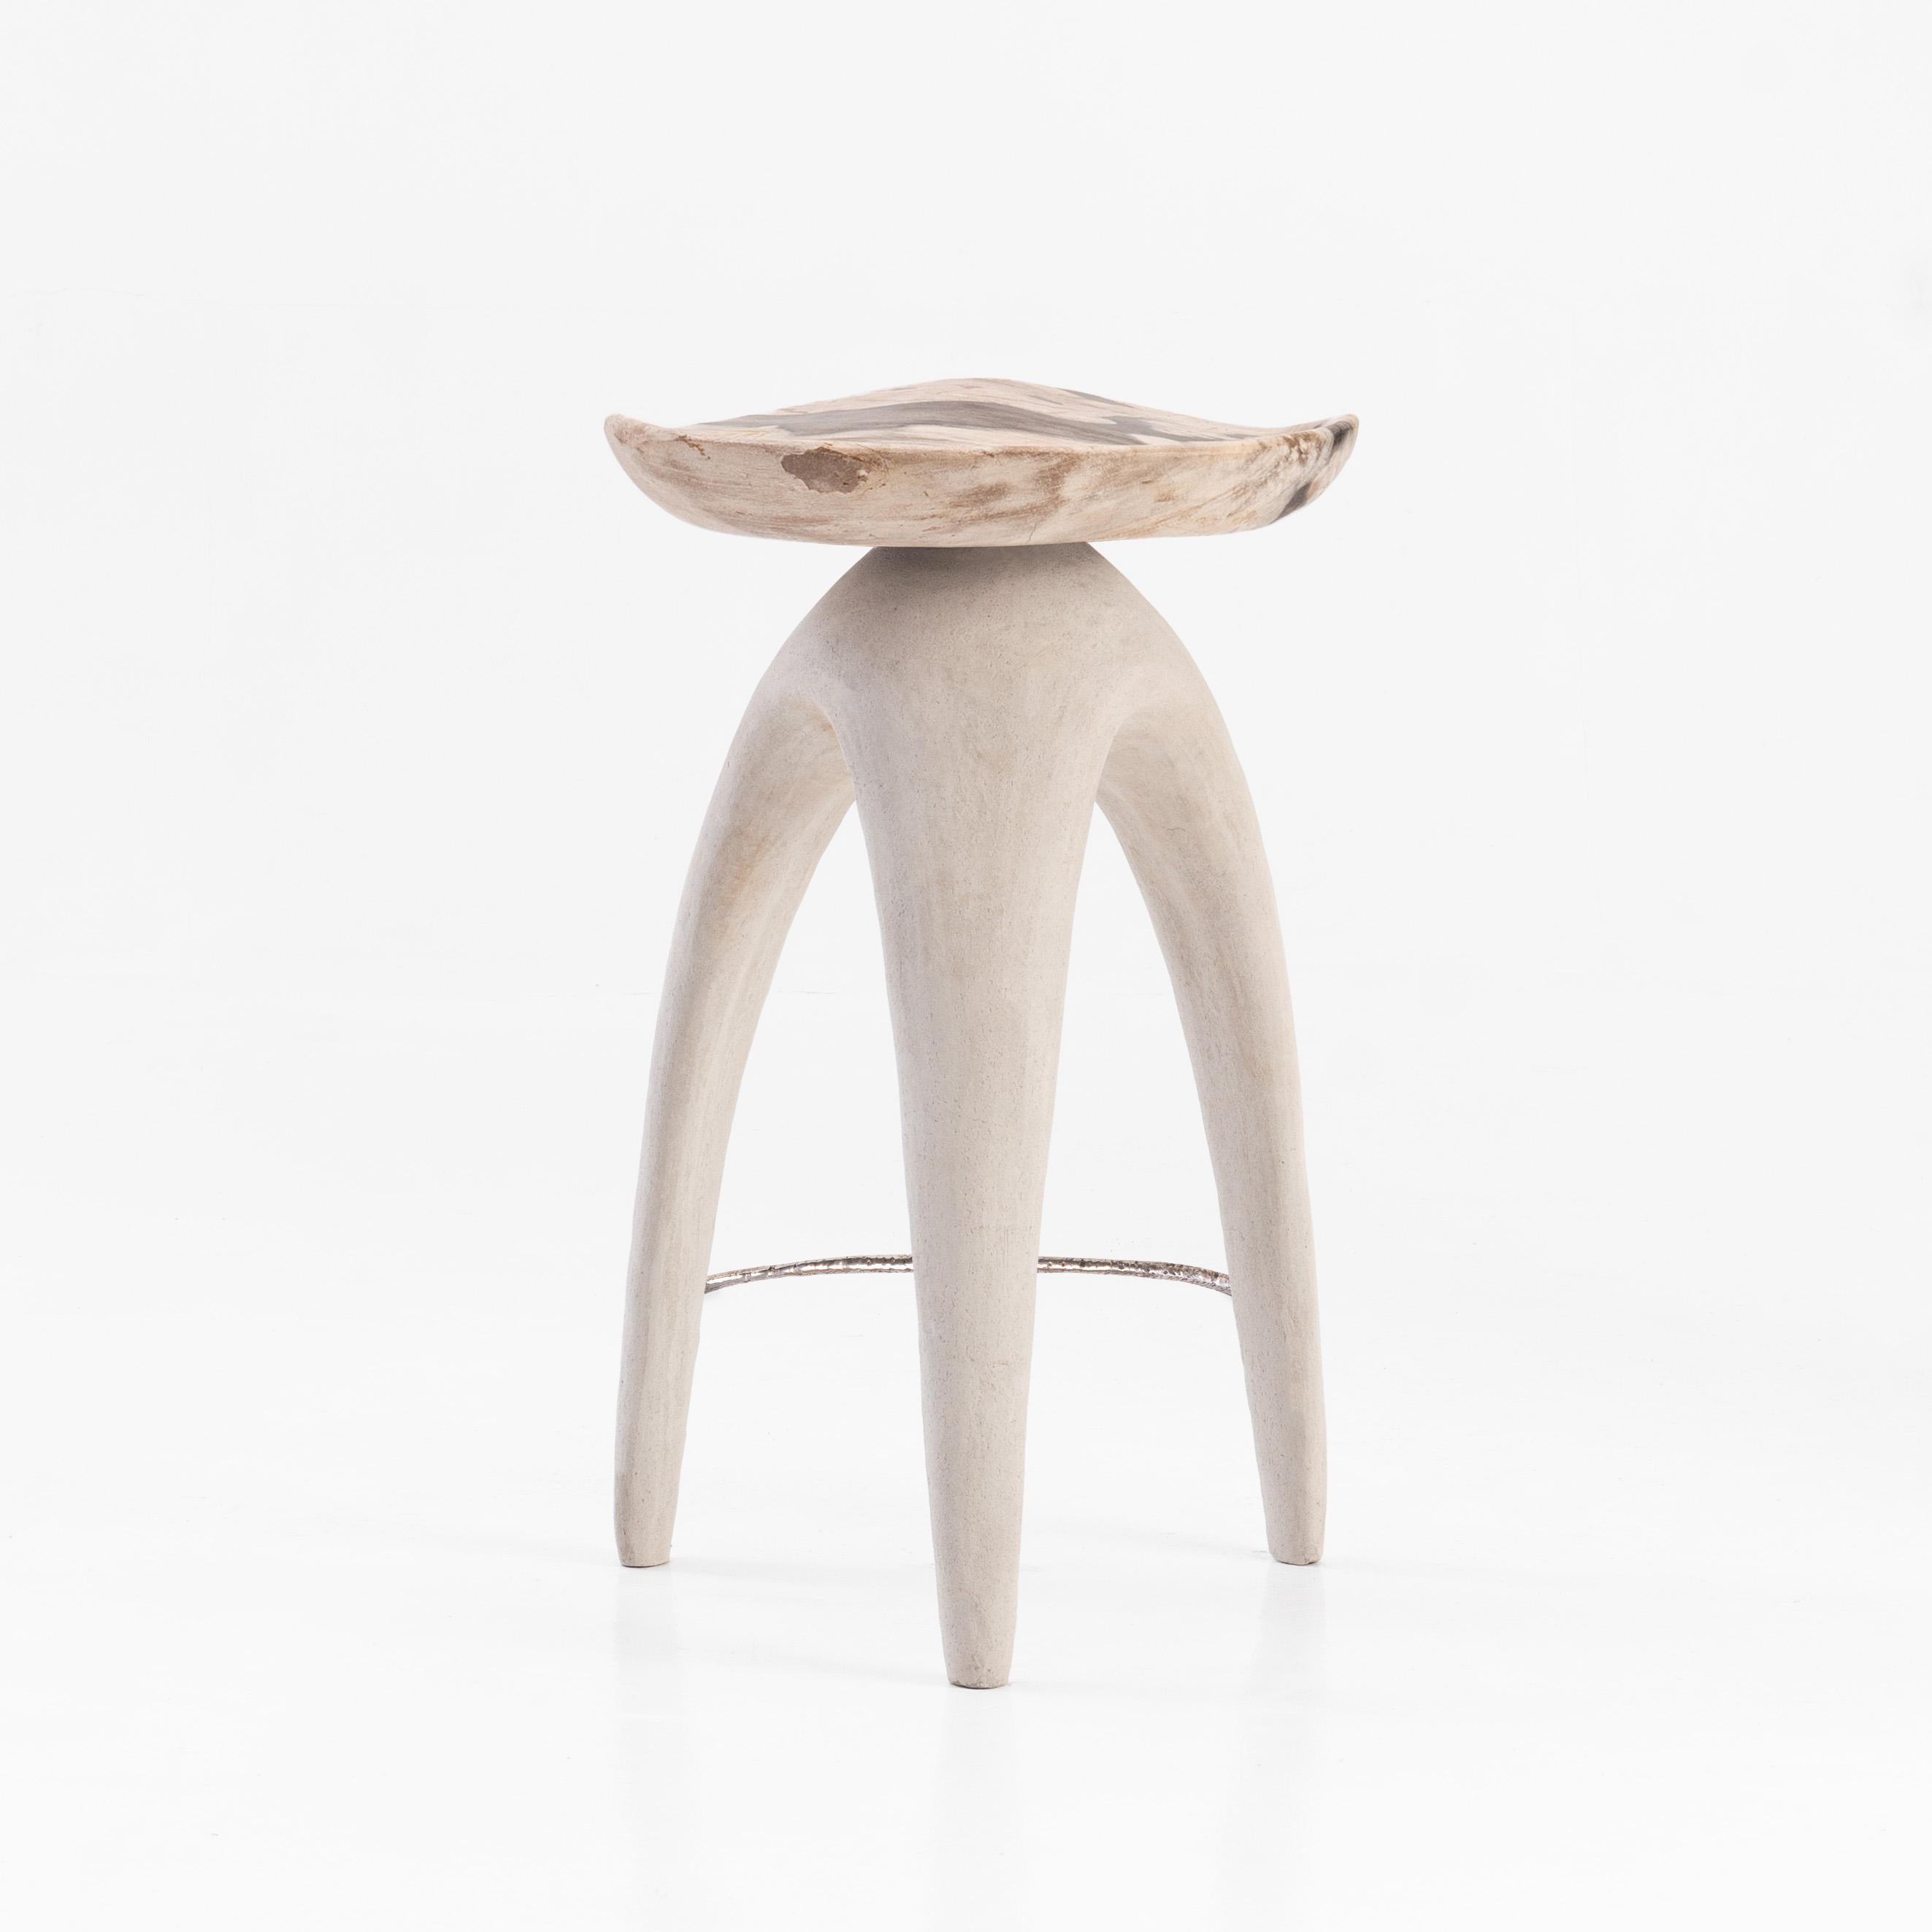 odd shaped stool